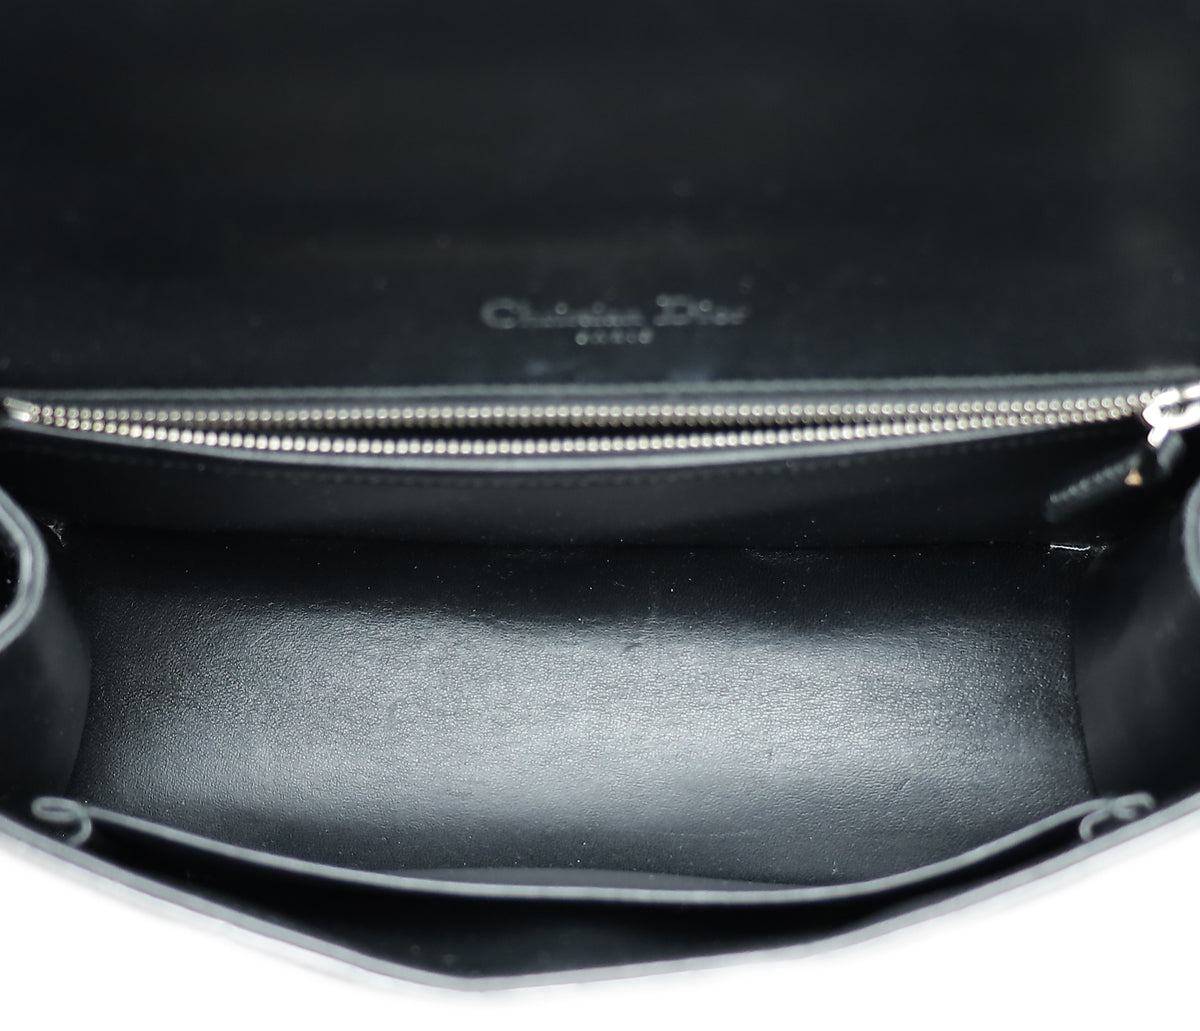 Christian Dior Black Shiny Crocodile Diorama Flap Medium Bag